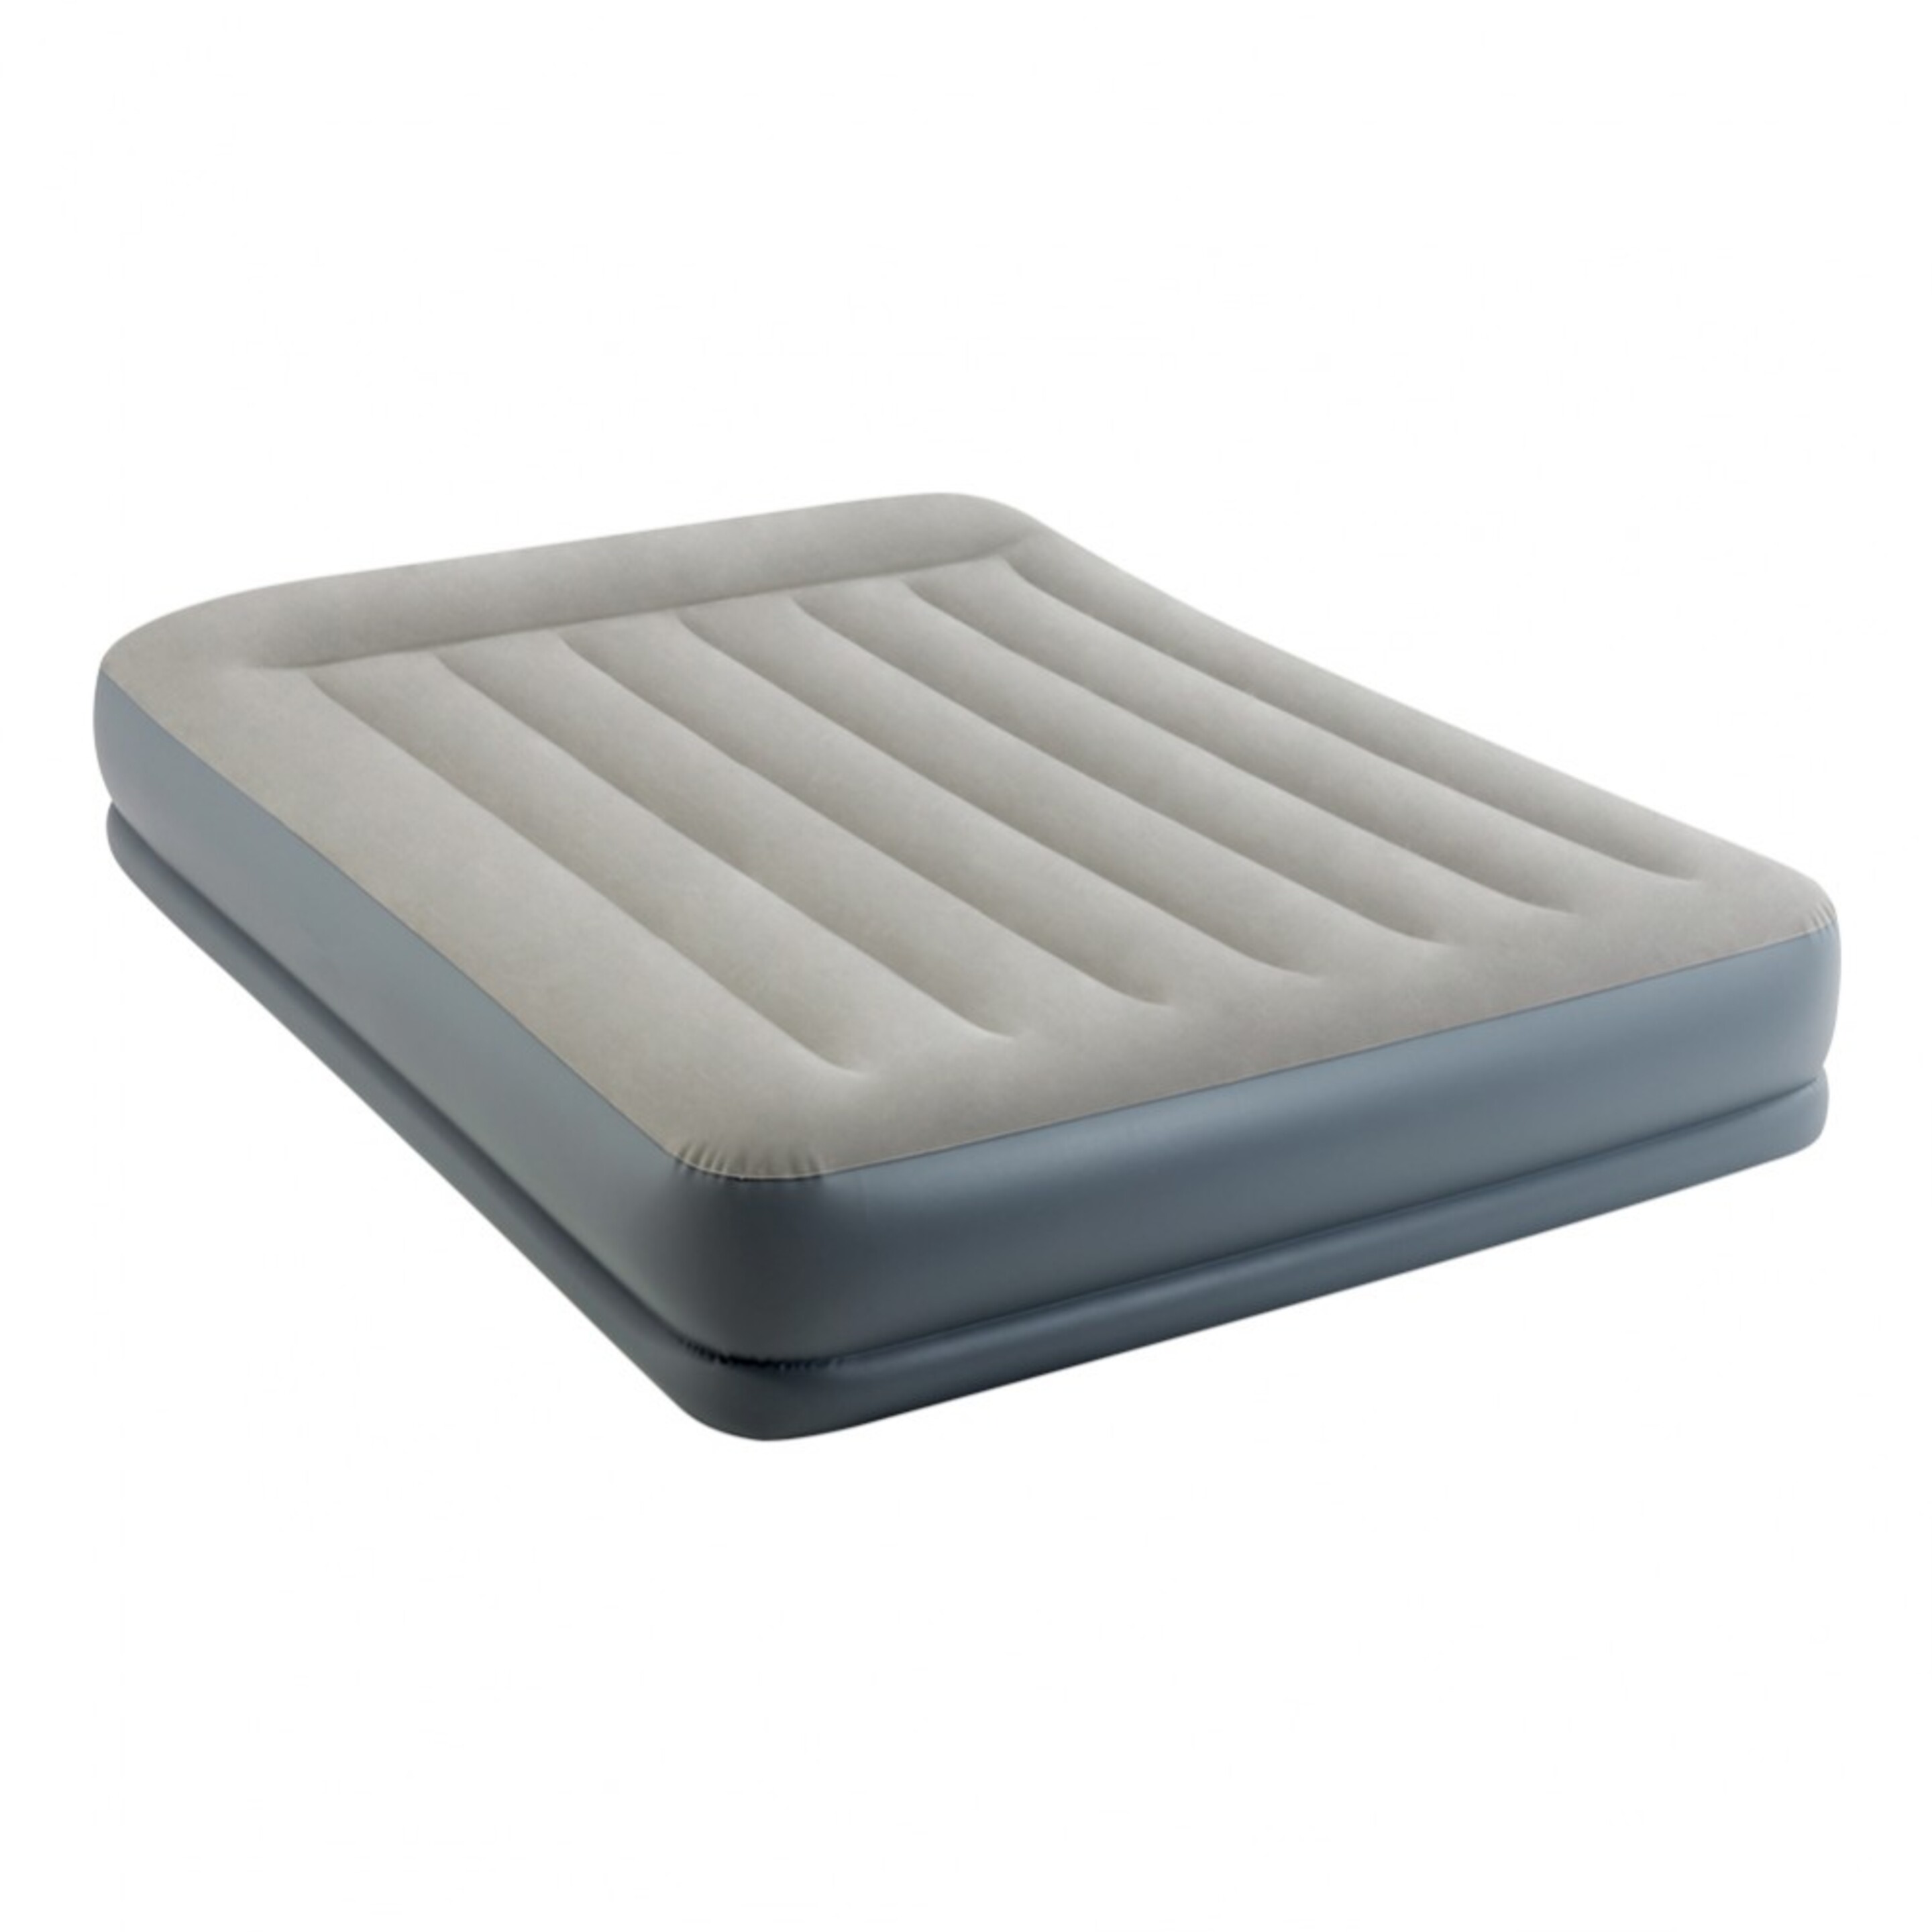 Colchão Insuflável Intex Dura-beam Standard Pillow Rest Midrise -152x203x30 Cm - gris - 